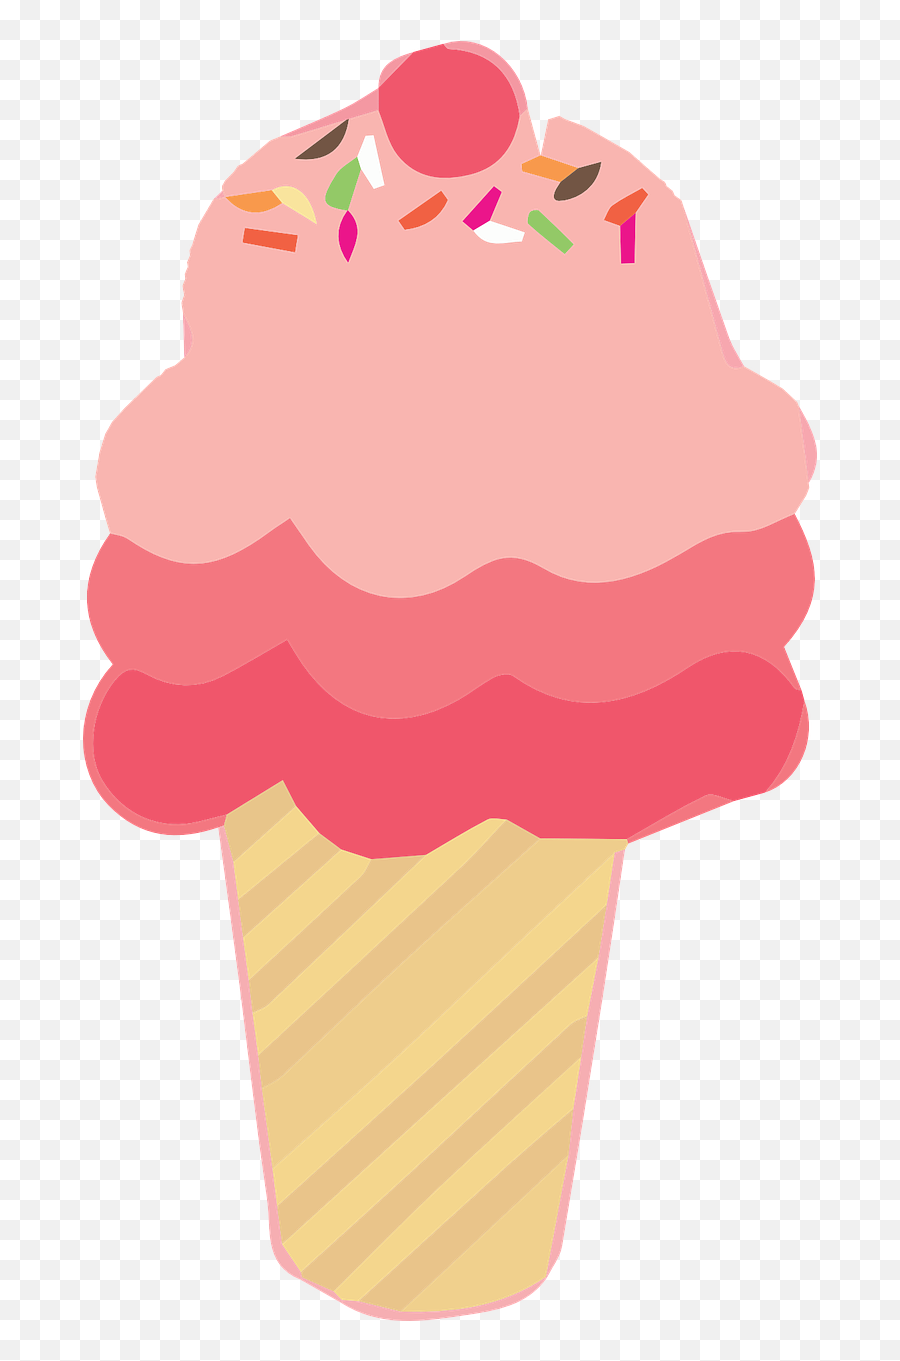 Cone Food Ice Cream - Free Vector Graphic On Pixabay Emoji,Ice Cream Cone Transparent Background